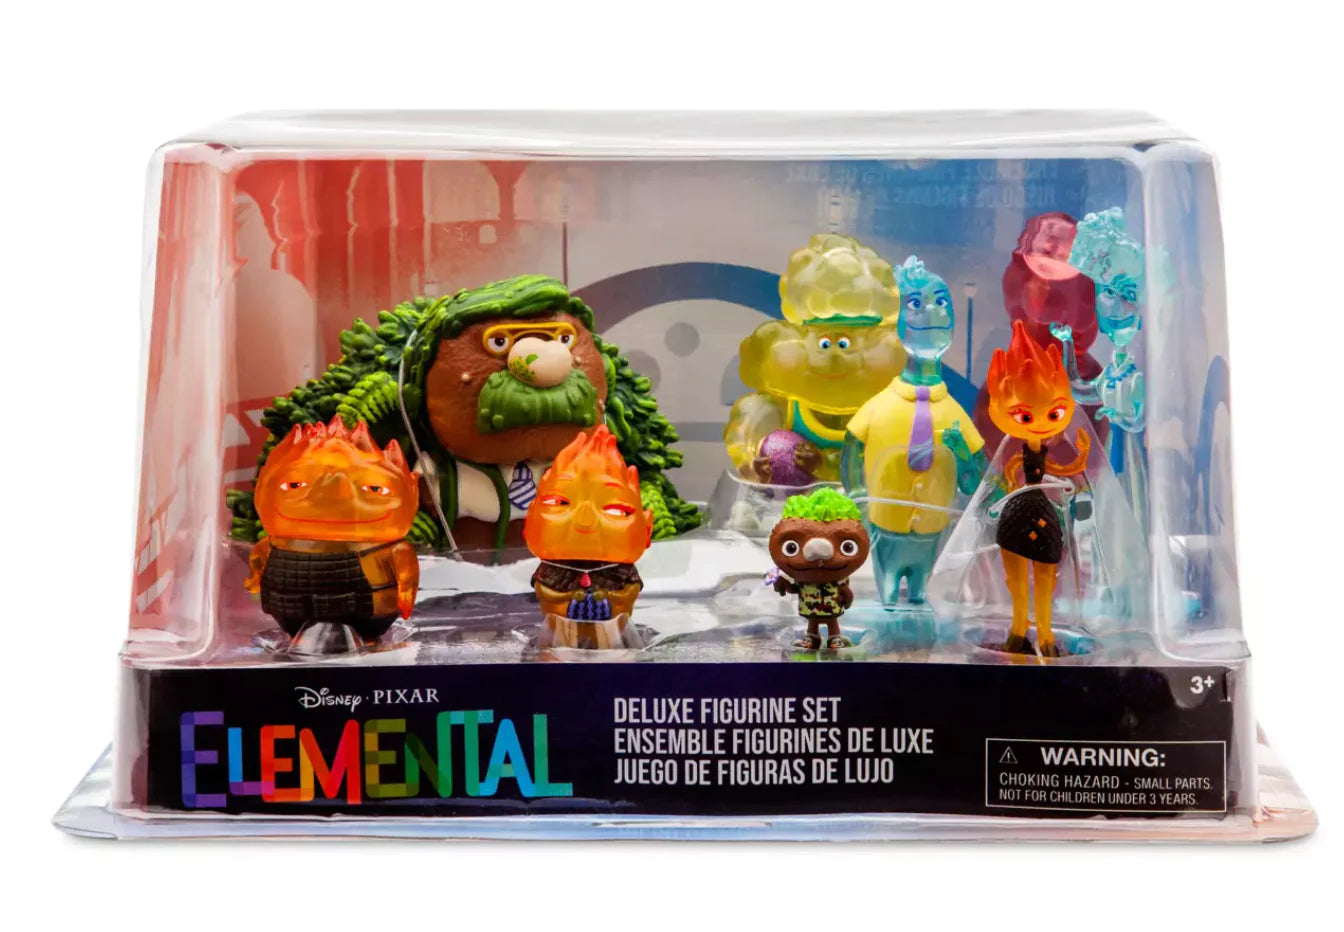 Elemental Disney Pixar Deluxe Figurine Set